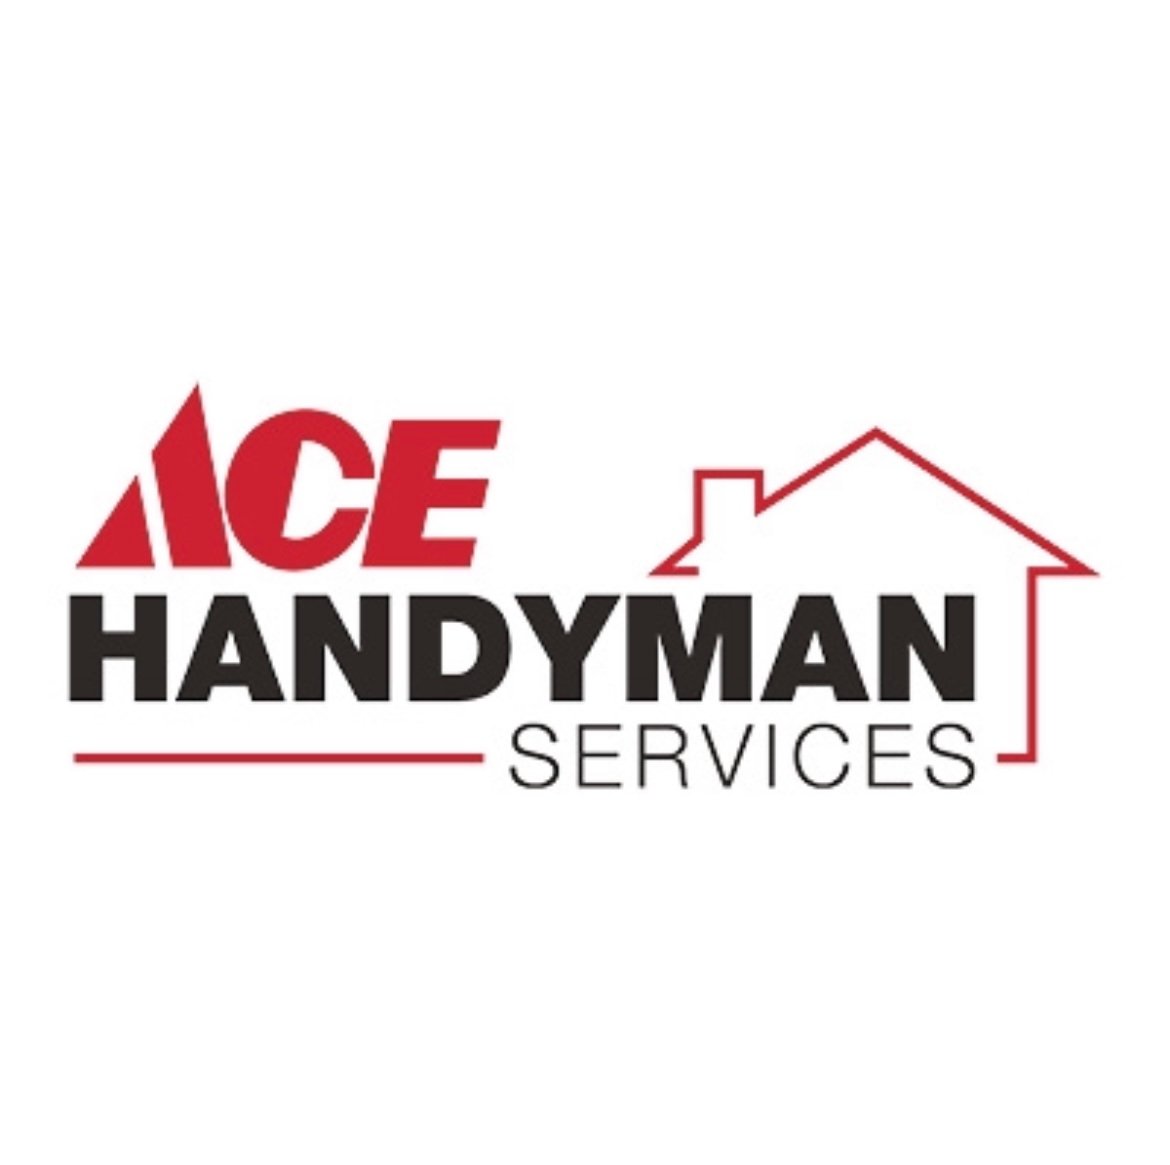 Ace Handyman Services West Oakland & Wayne Counties Logo